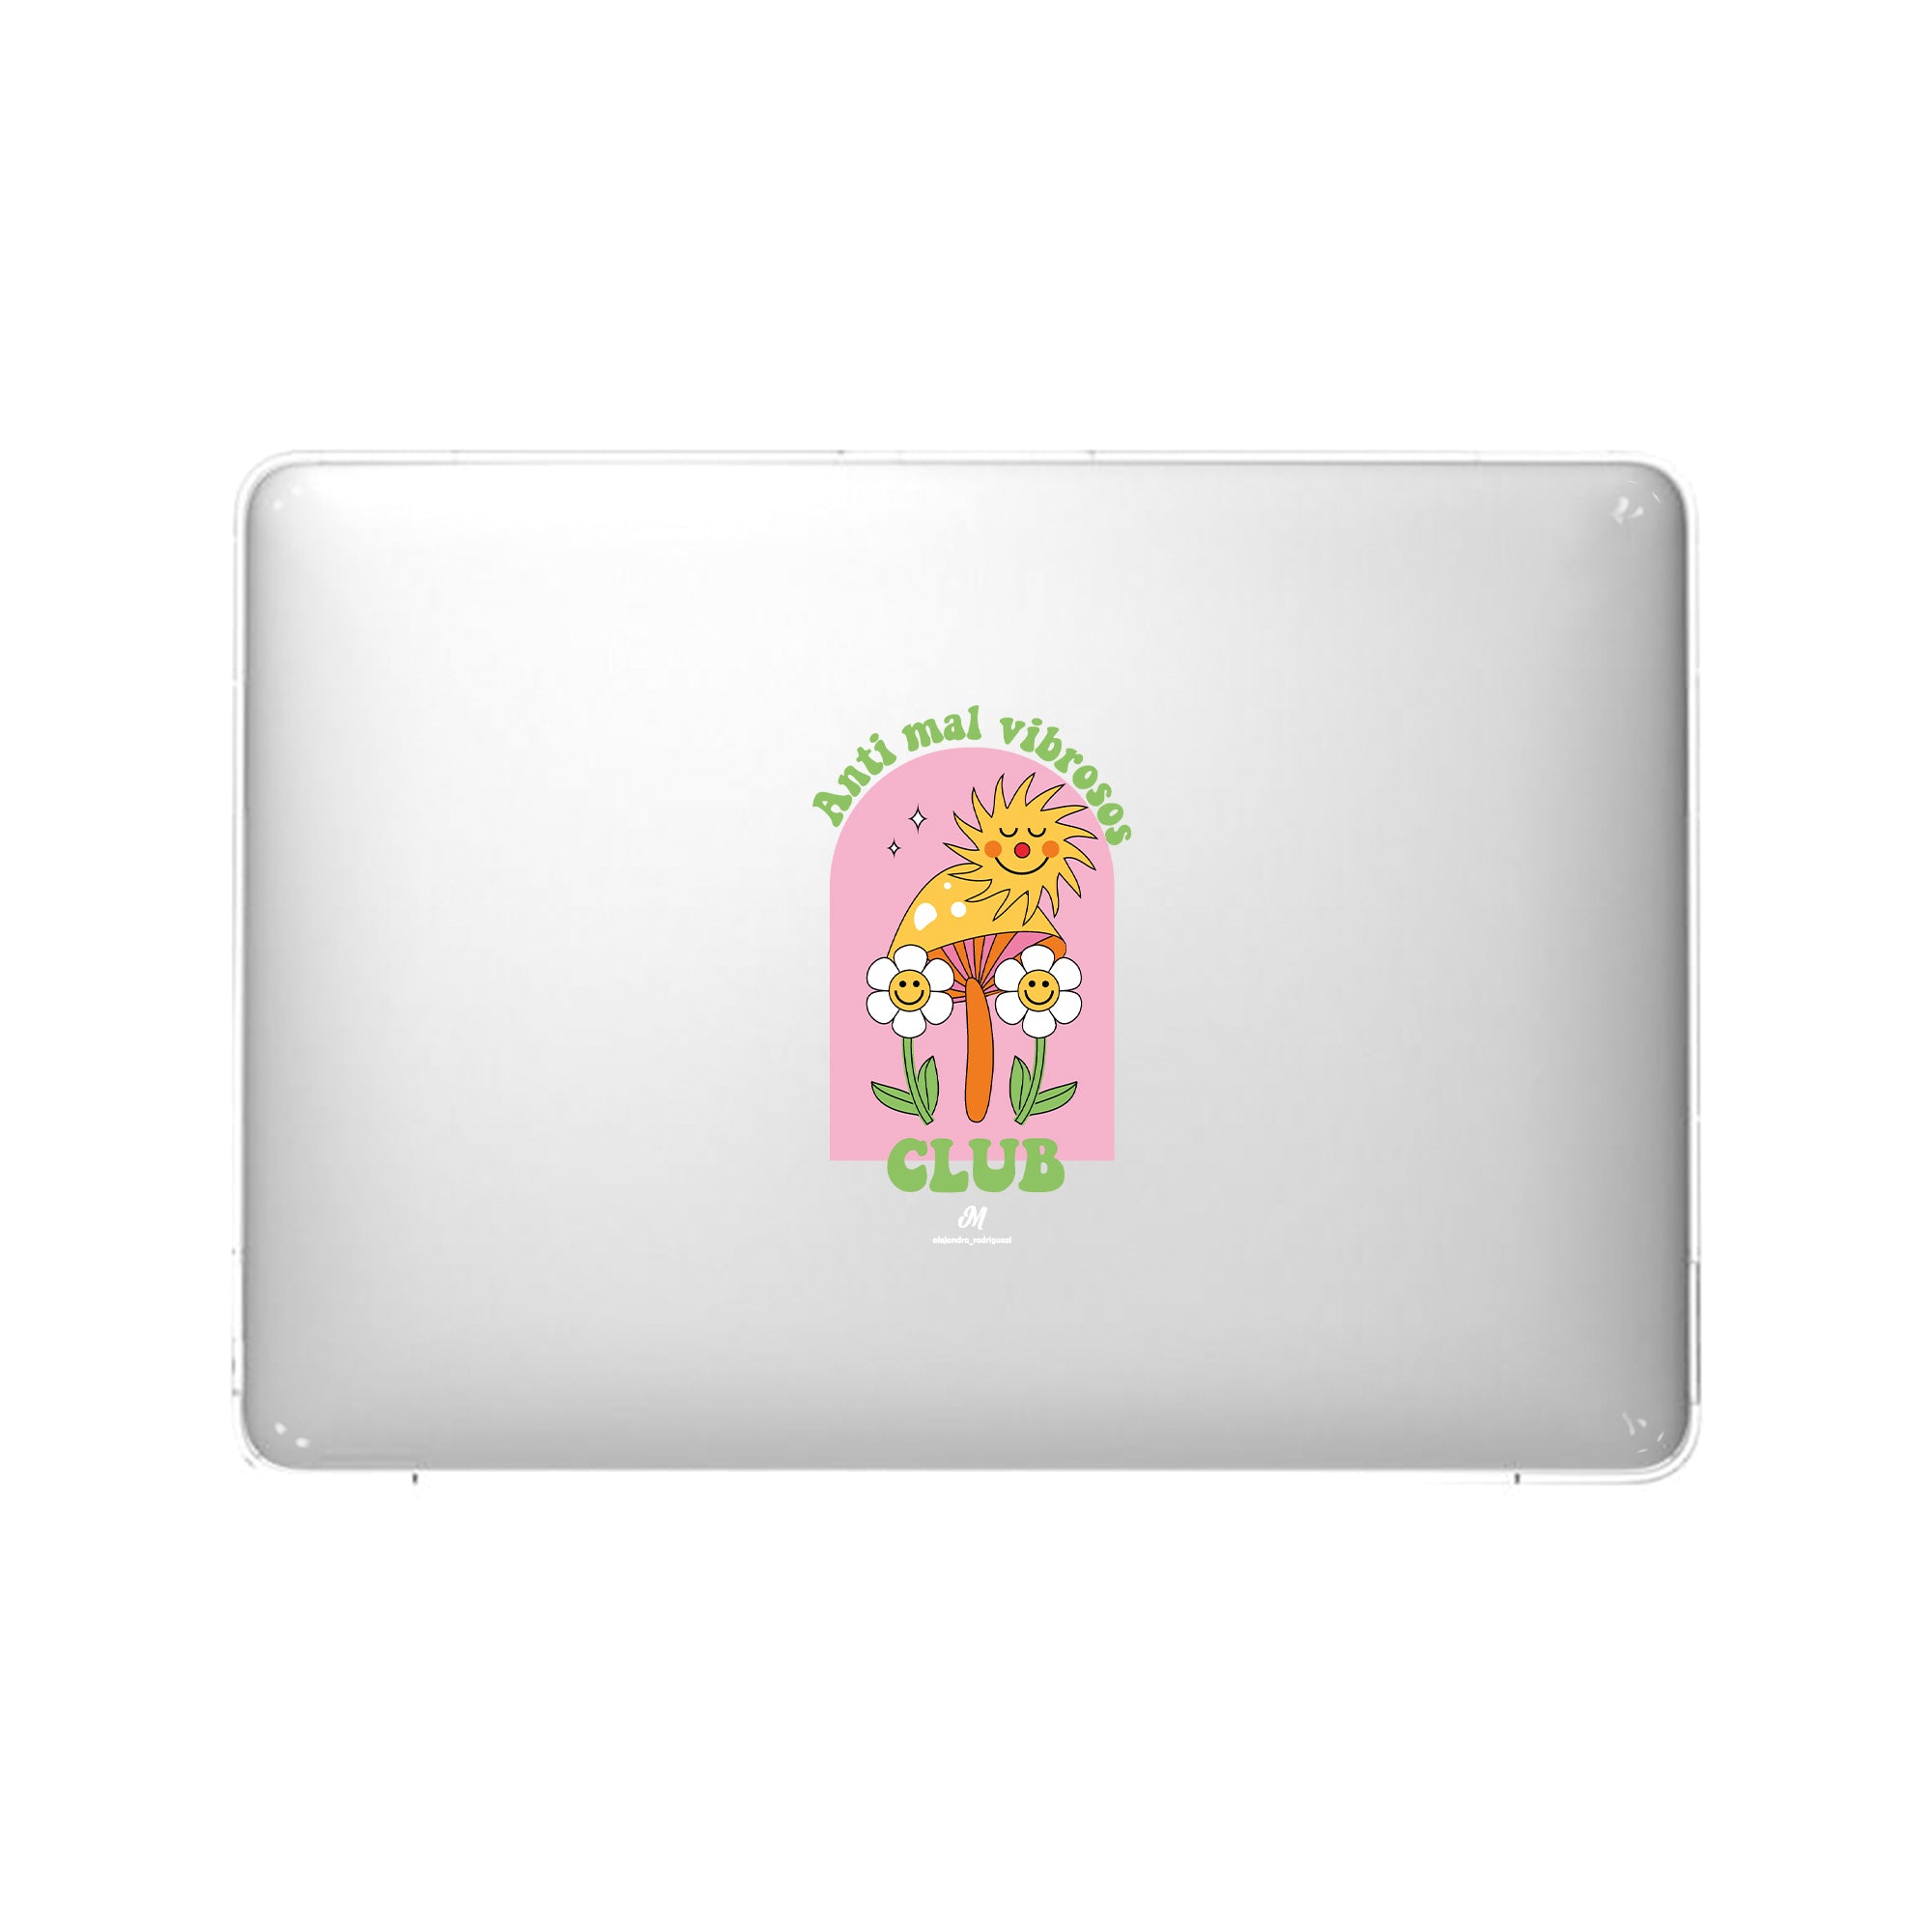 Anti Mal Vibrosos Club MacBook Case - Mandala Cases